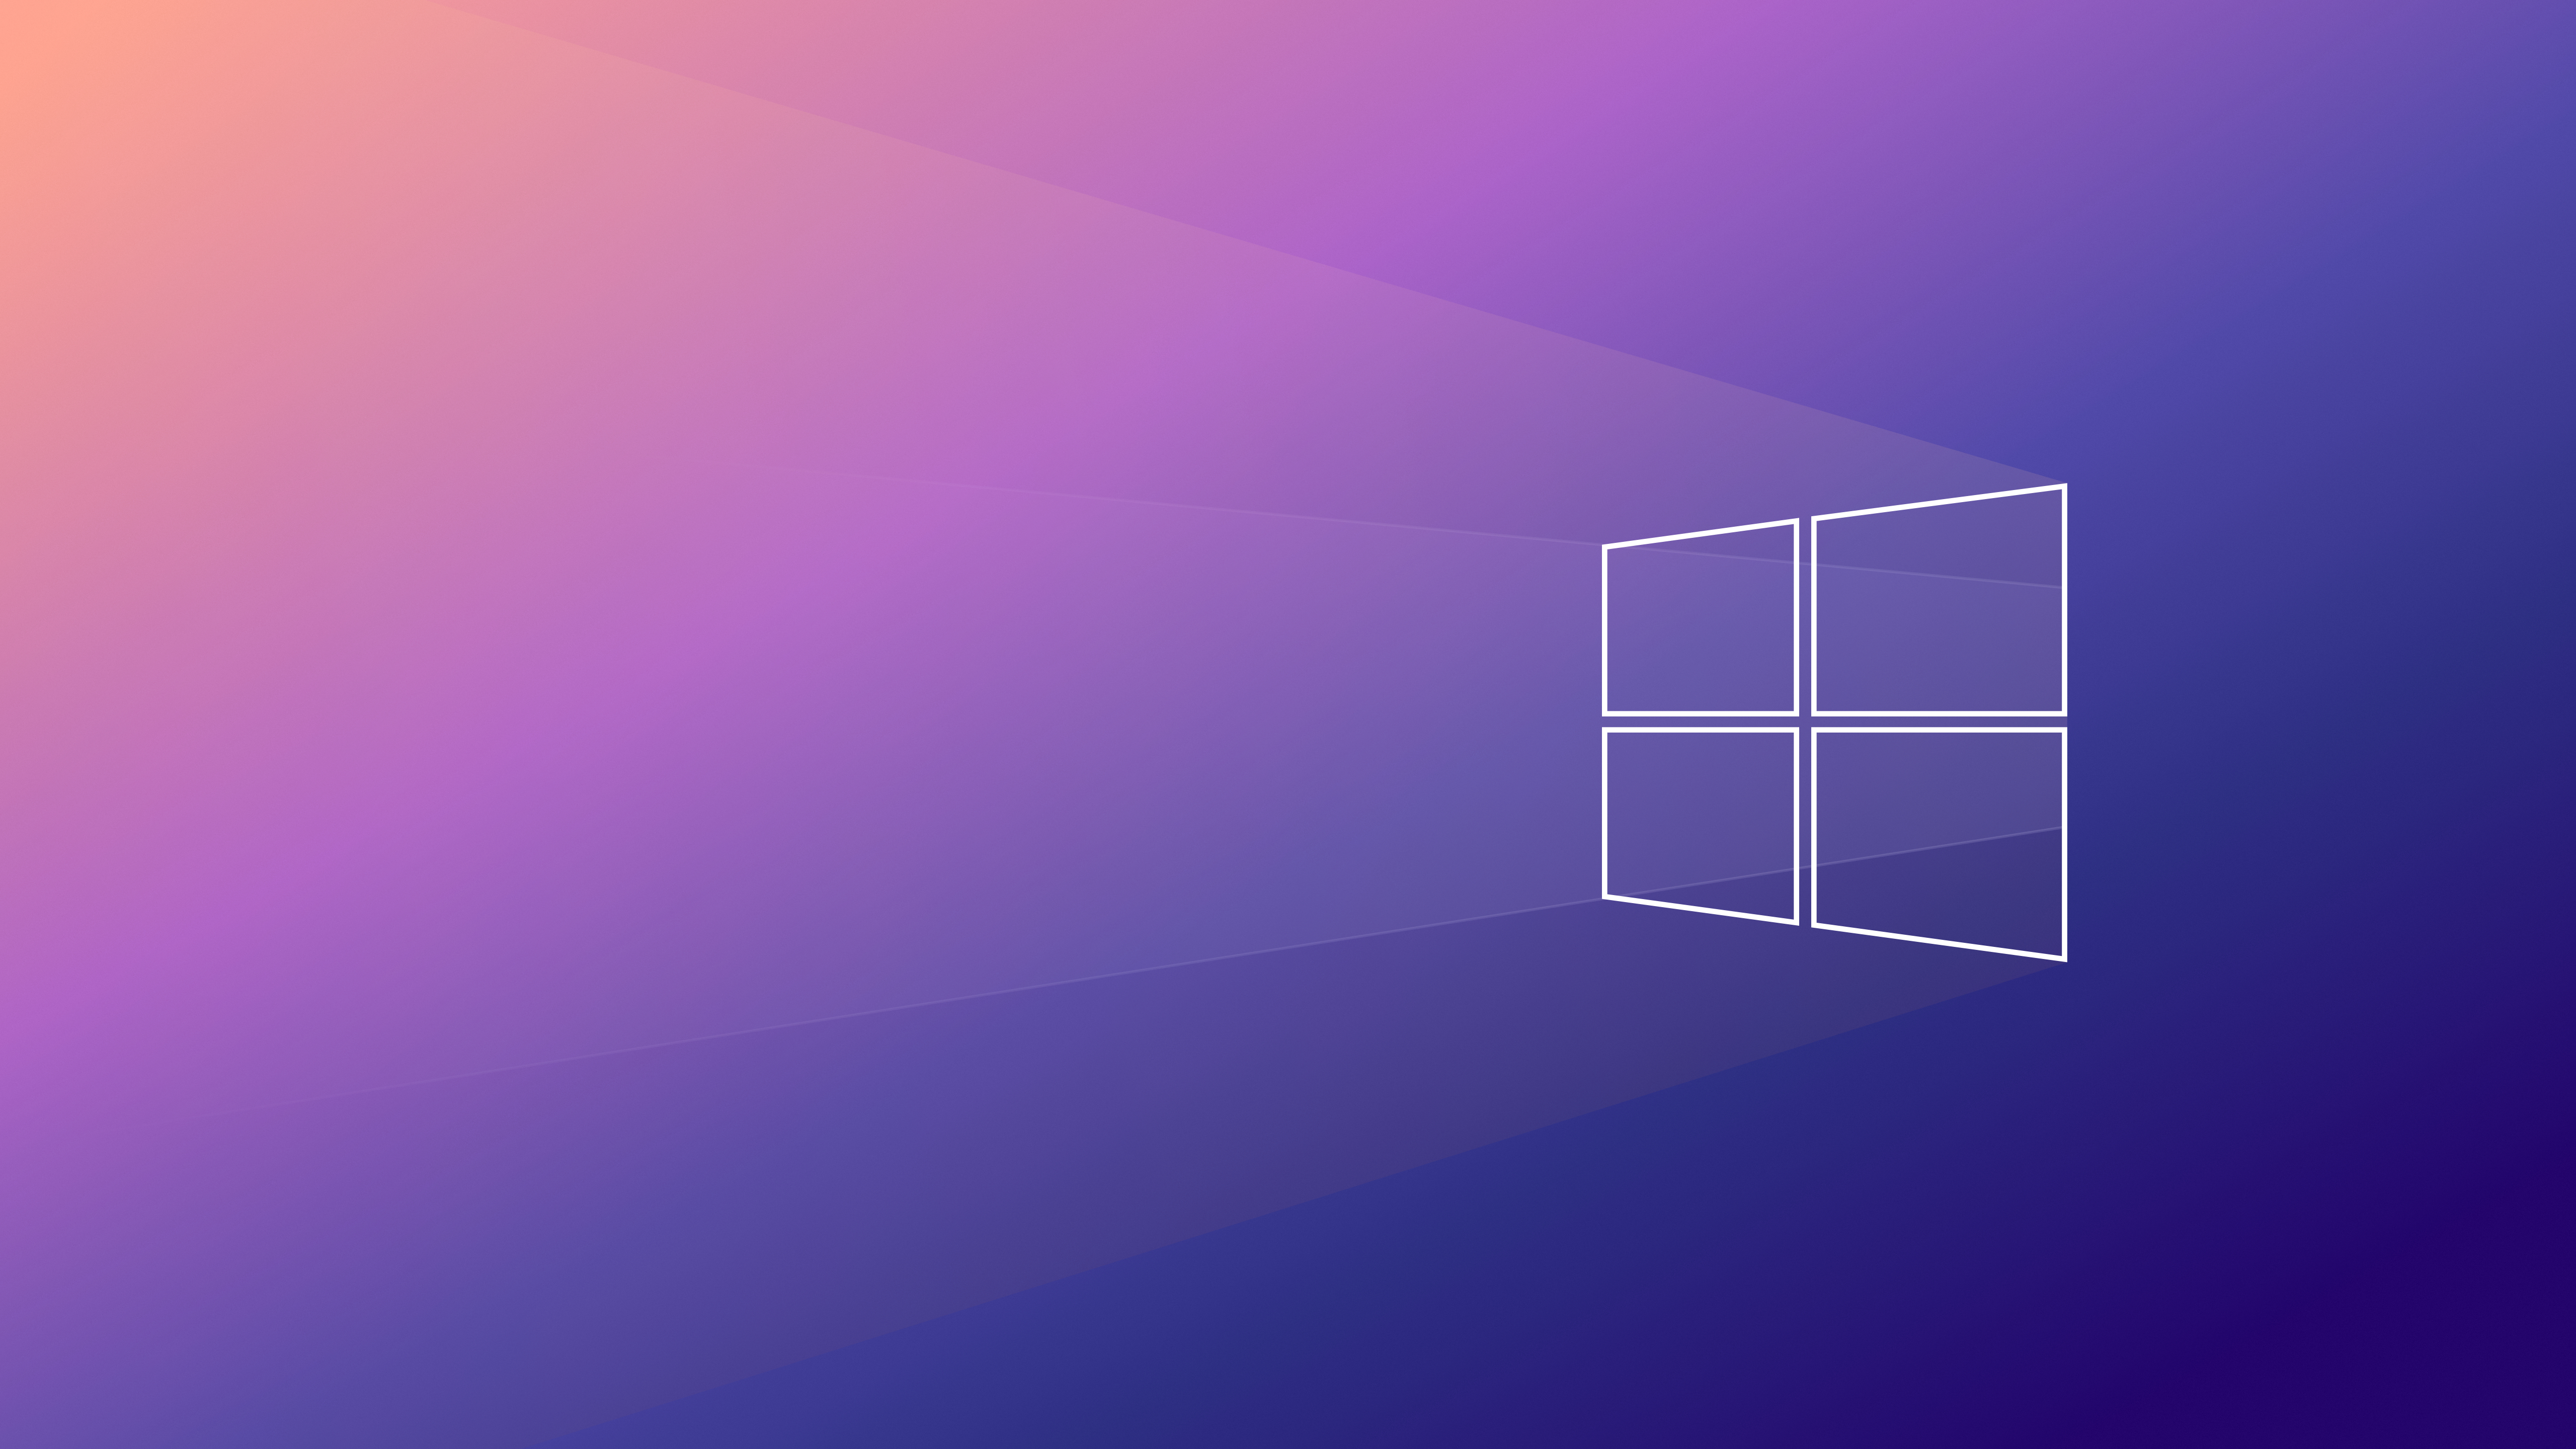 Windows 10 5K Gradient Art Wallpaper, HD Minimalist 4K Wallpapers, Images,  Photos and Background - Wallpapers Den